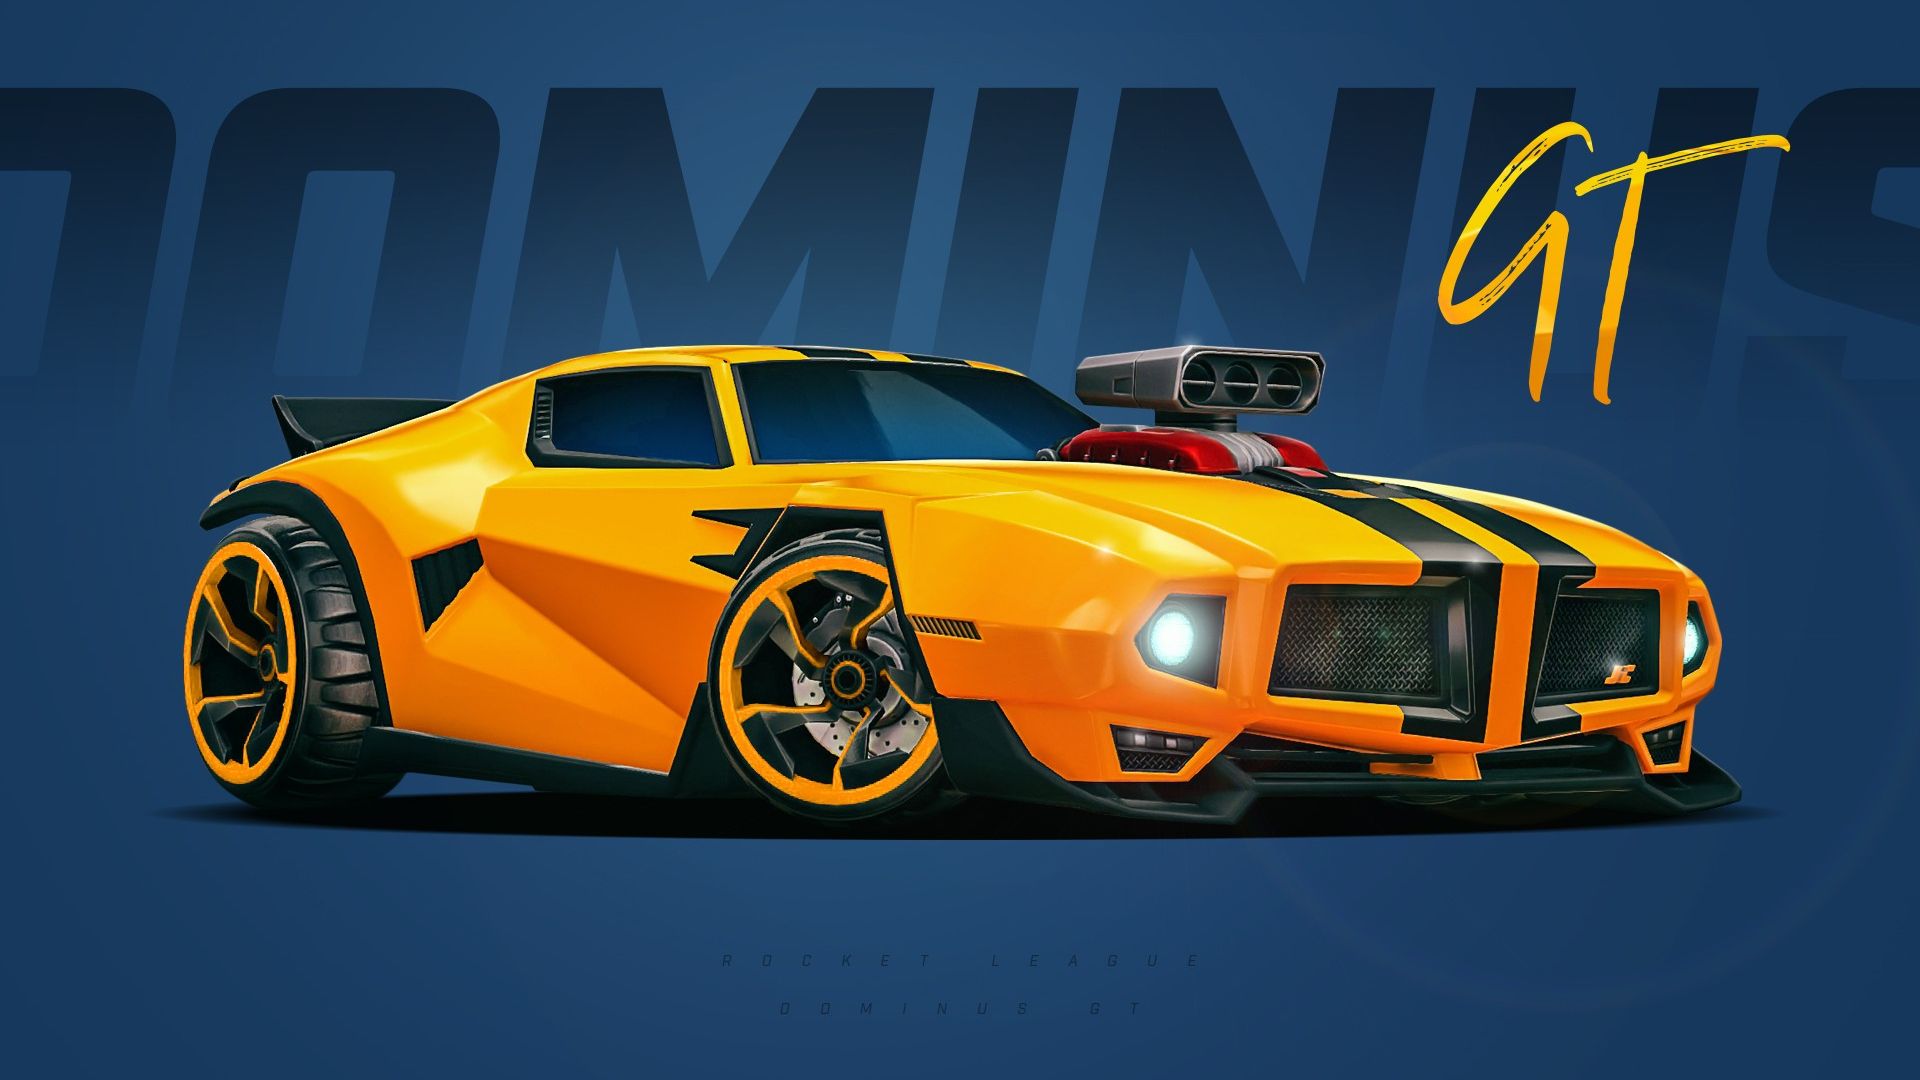 Wallpaper Rocket League, Video Game, GT car, yellow car, art